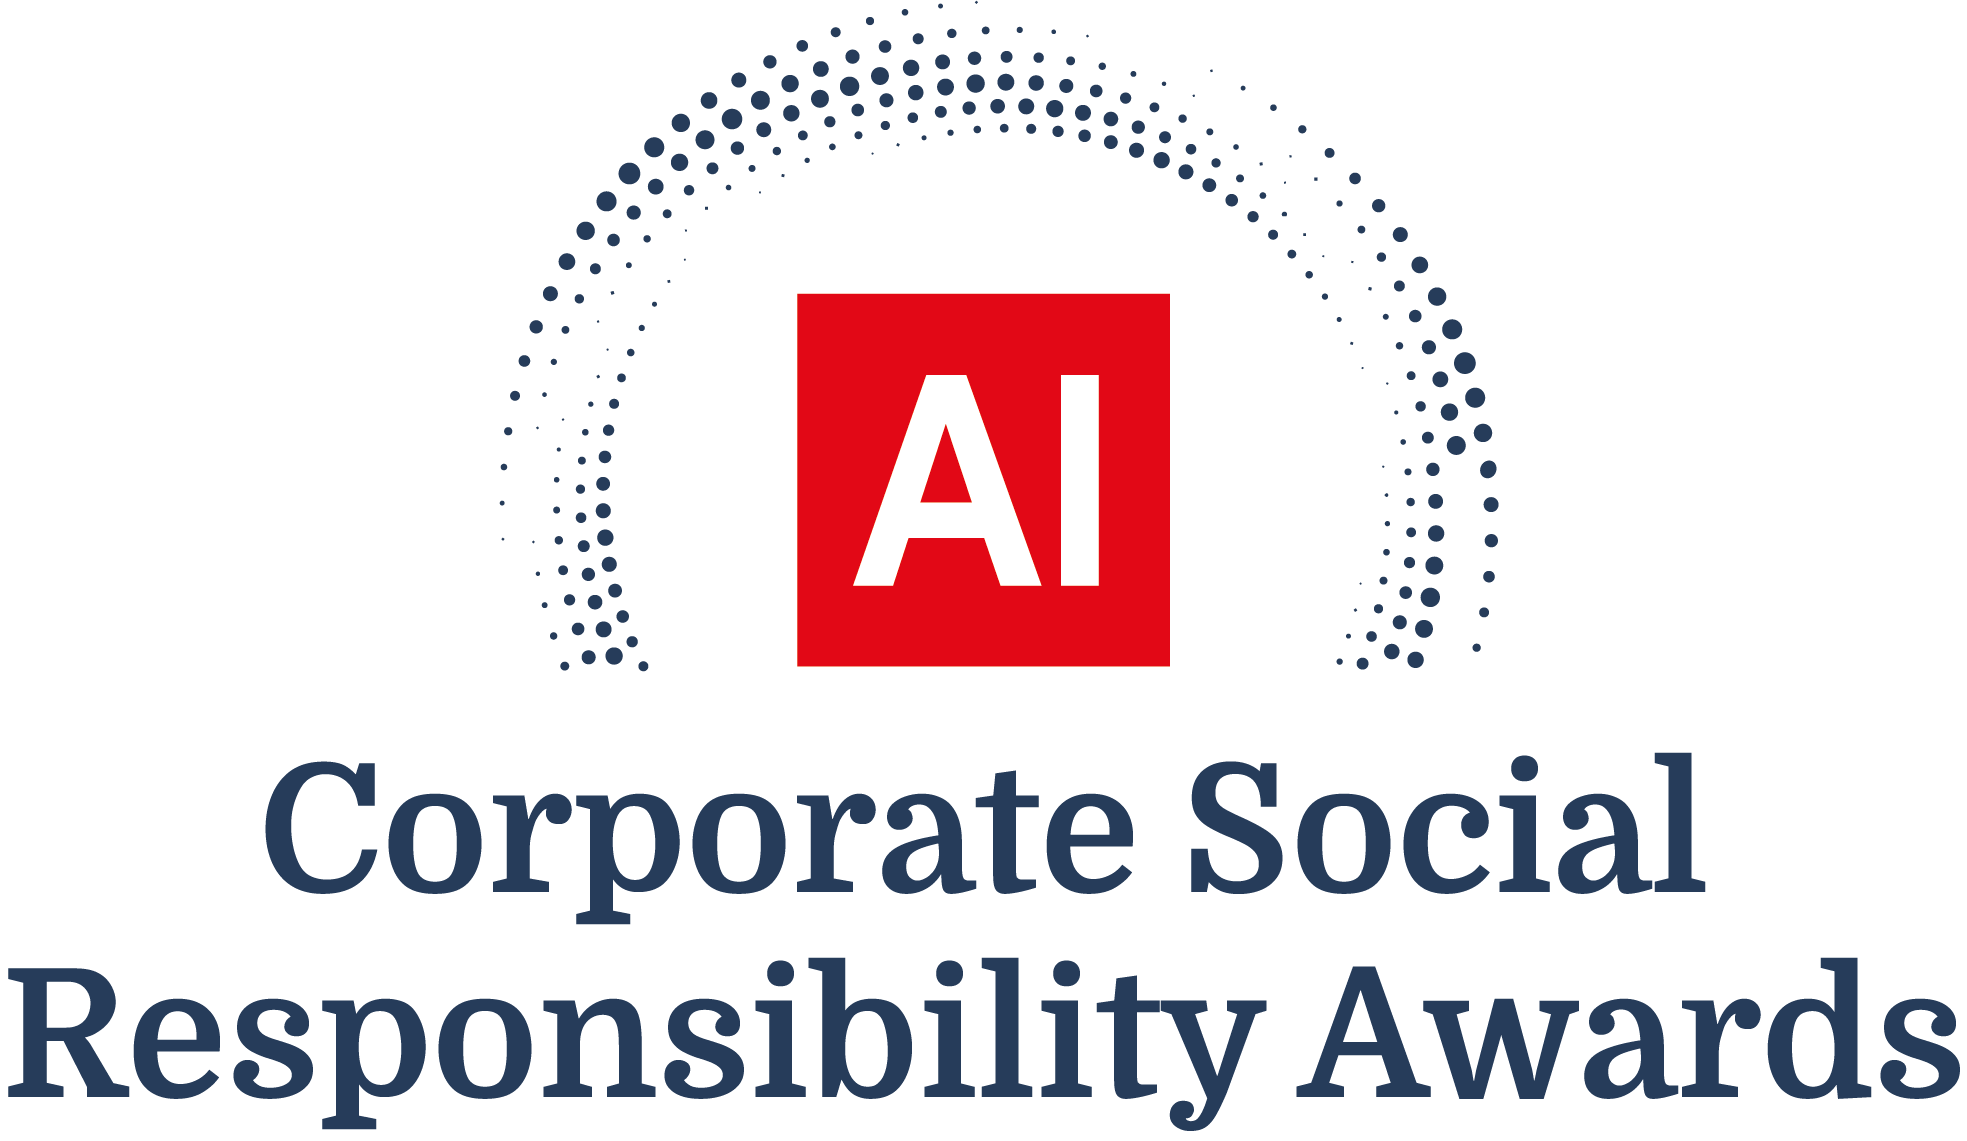 Award Logo - Corporate Social Responsibility Awards